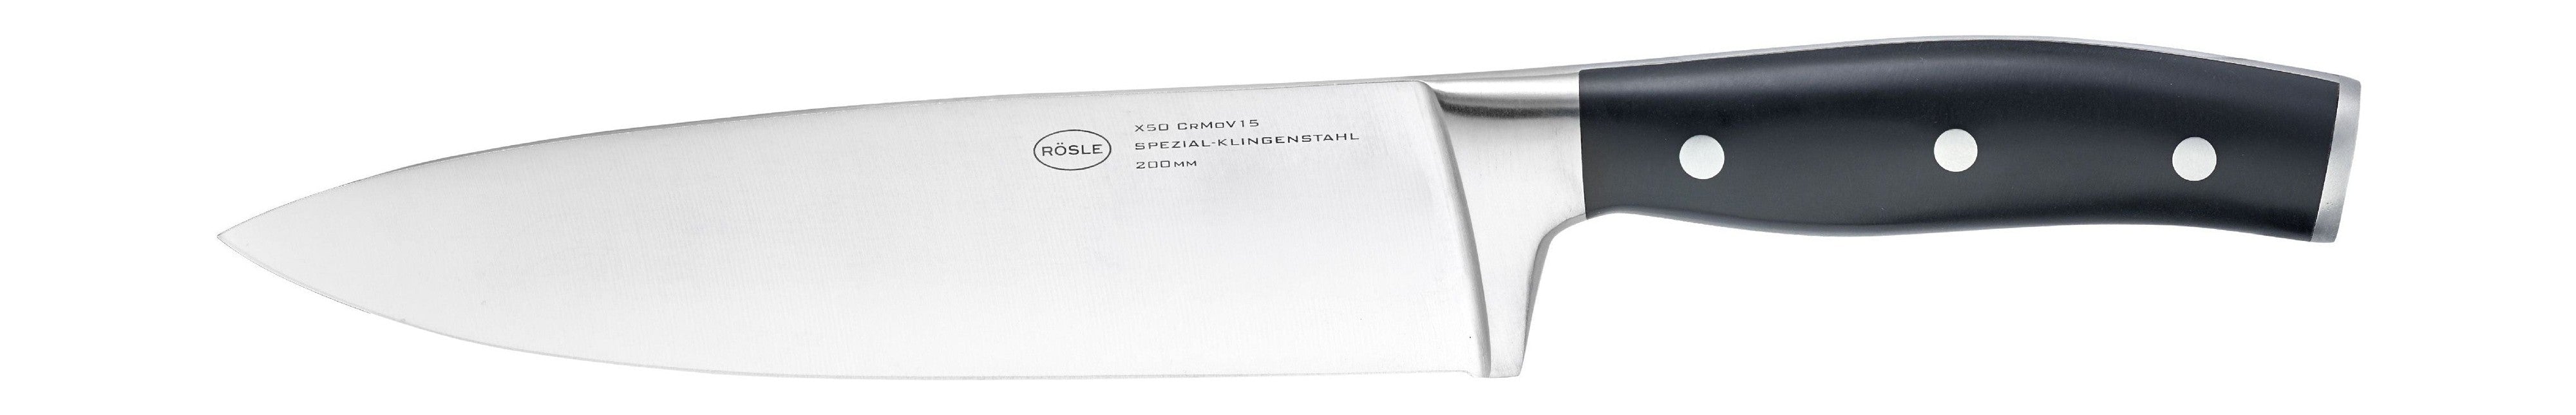 Rösle Traditionskockkniv 20 cm